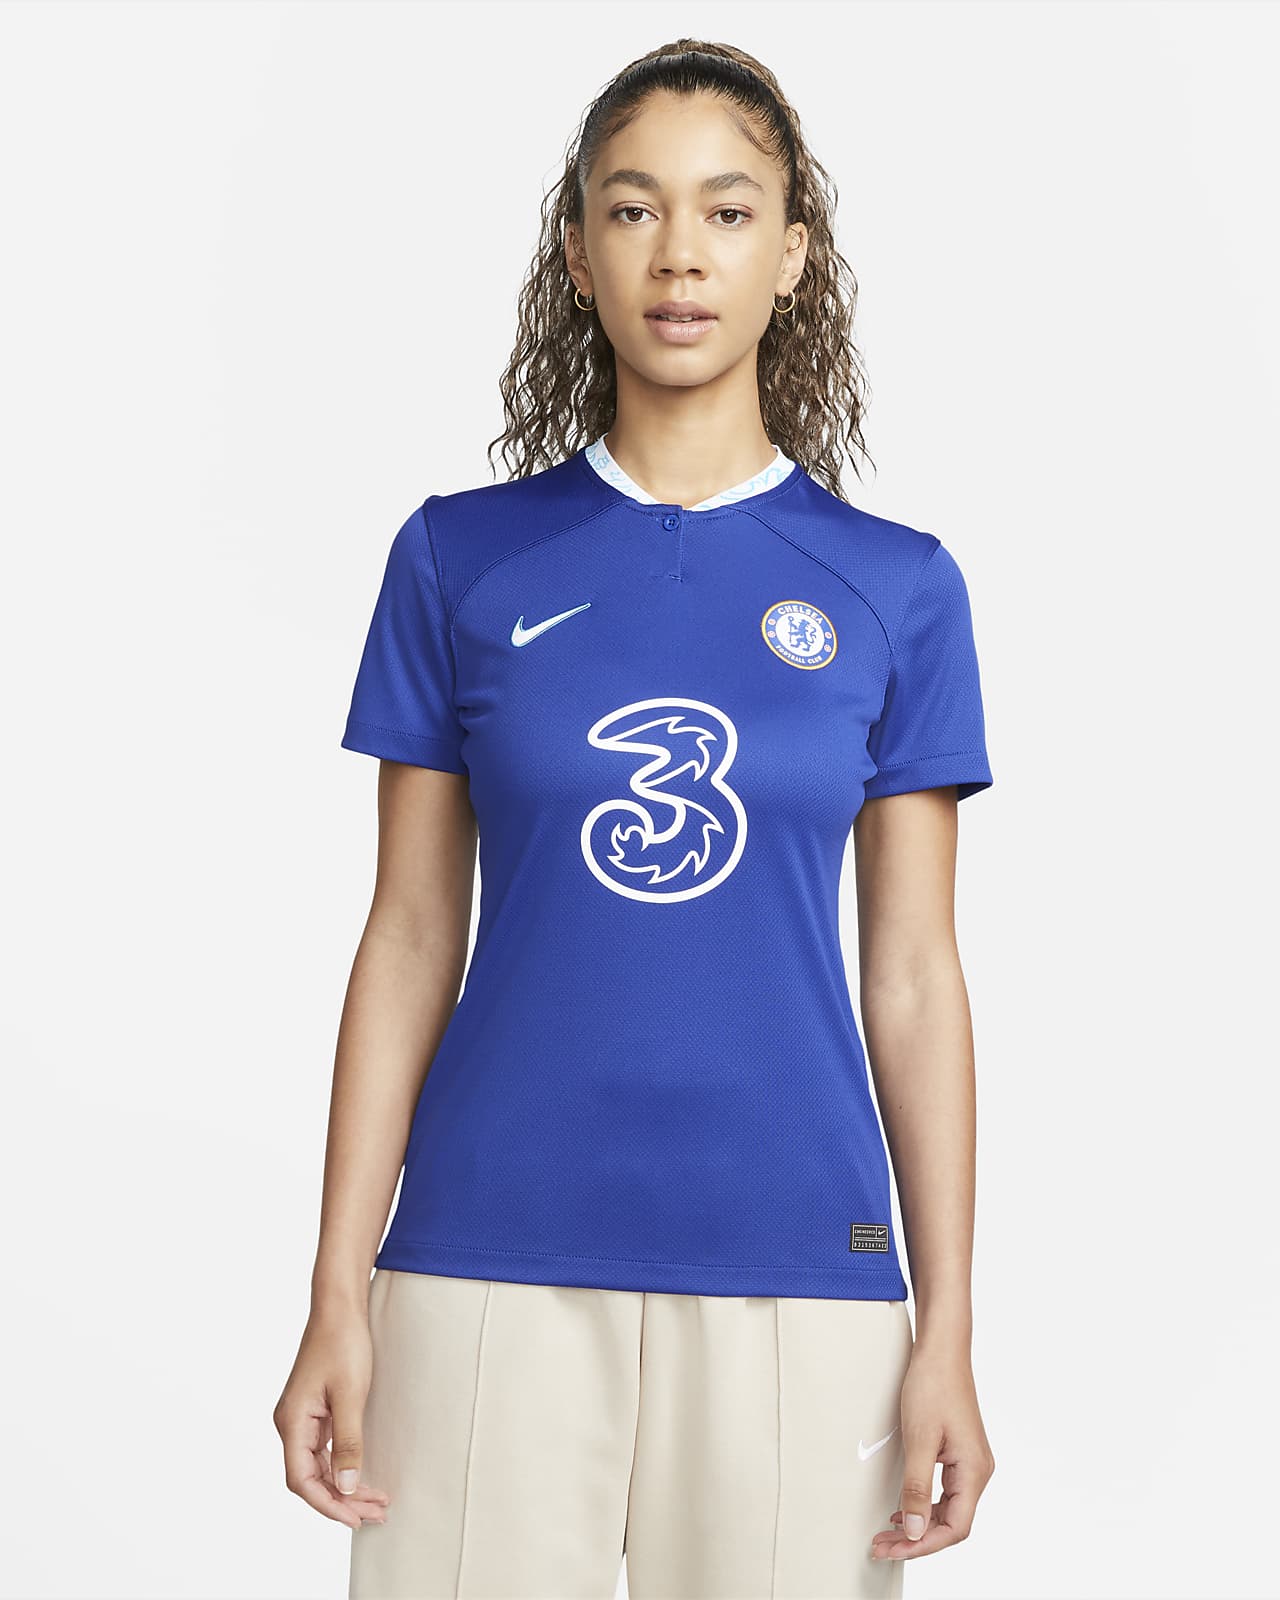 Chelsea F.C. 2022/23 Stadium Home Women's Nike Dri-FIT Football Shirt